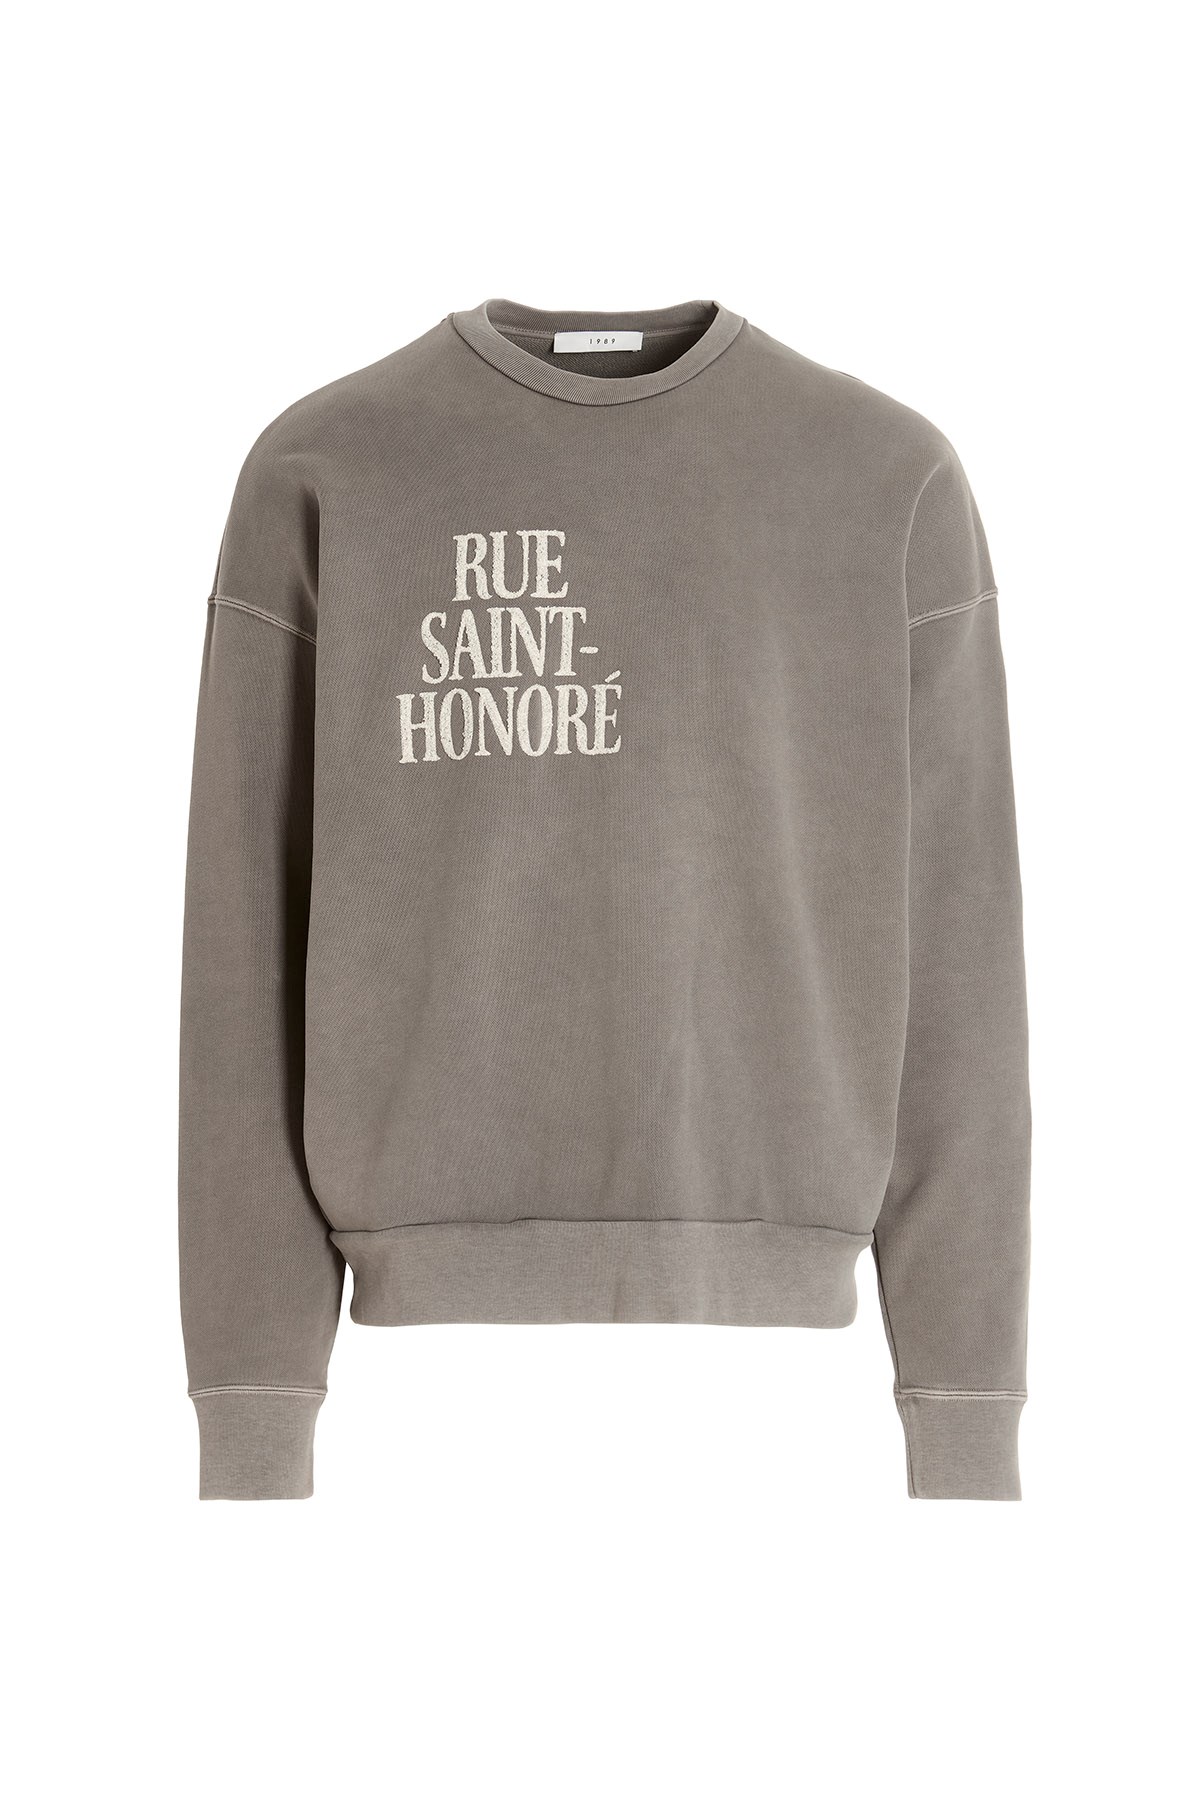 1989 Sweatshirt 'Rue Saint-Honoré'